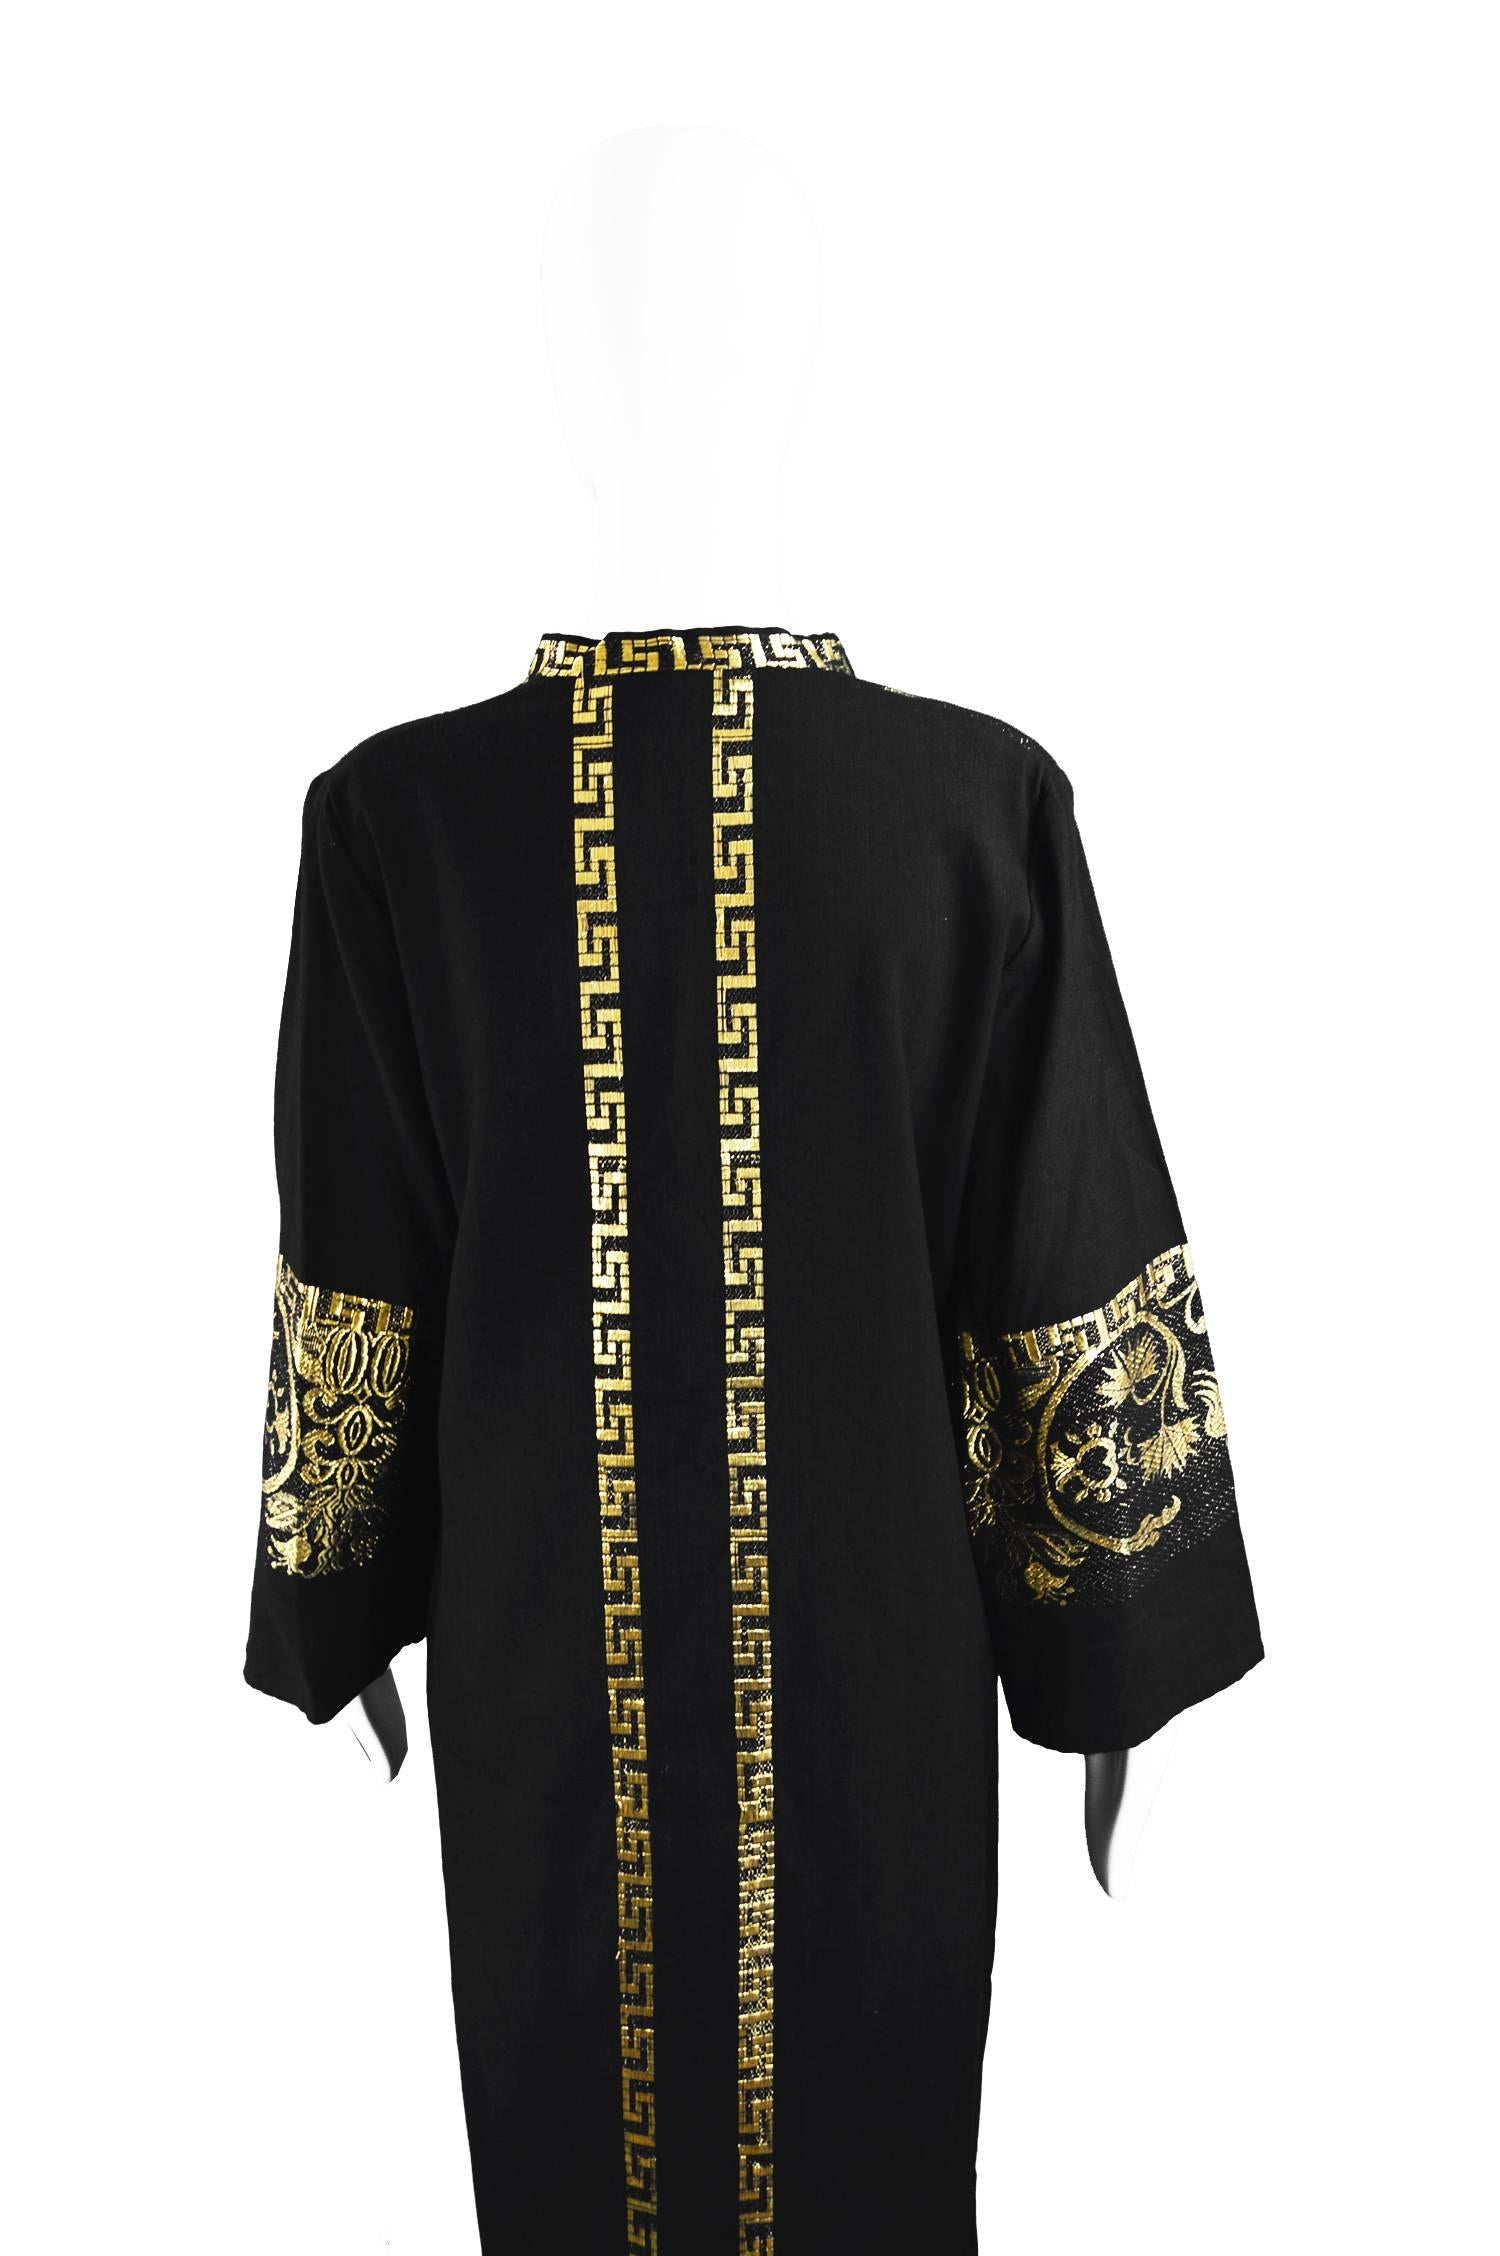 Vintage 1970s Black & Gold Lamé Embroidered Caftan Maxi Dress 4